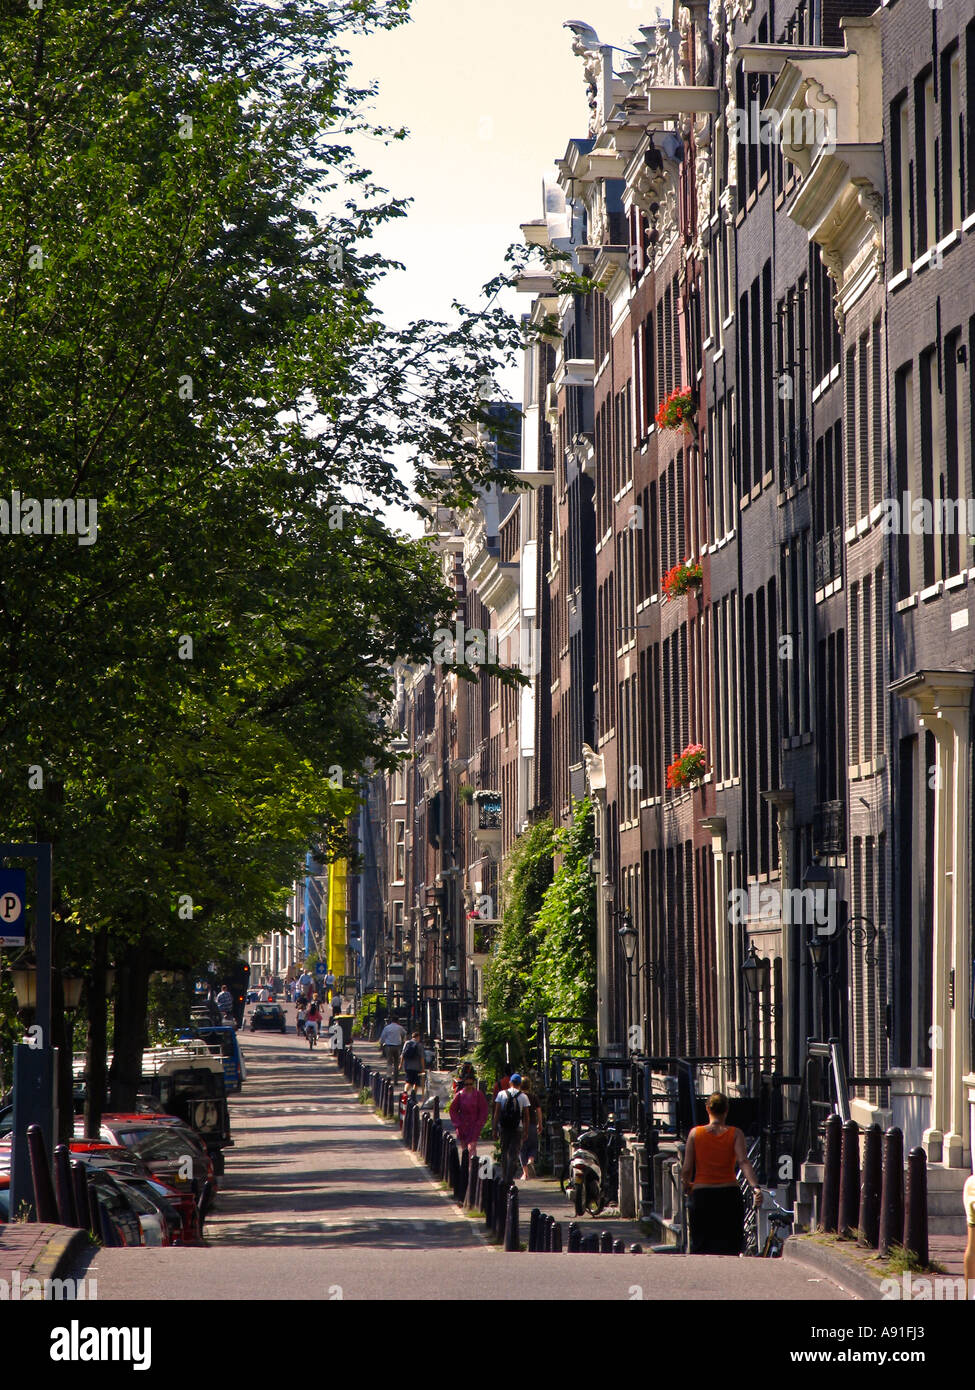 Blick auf eine hübsche Gracht à Amsterdam en vue d'un joli canal à Amsterdam Banque D'Images